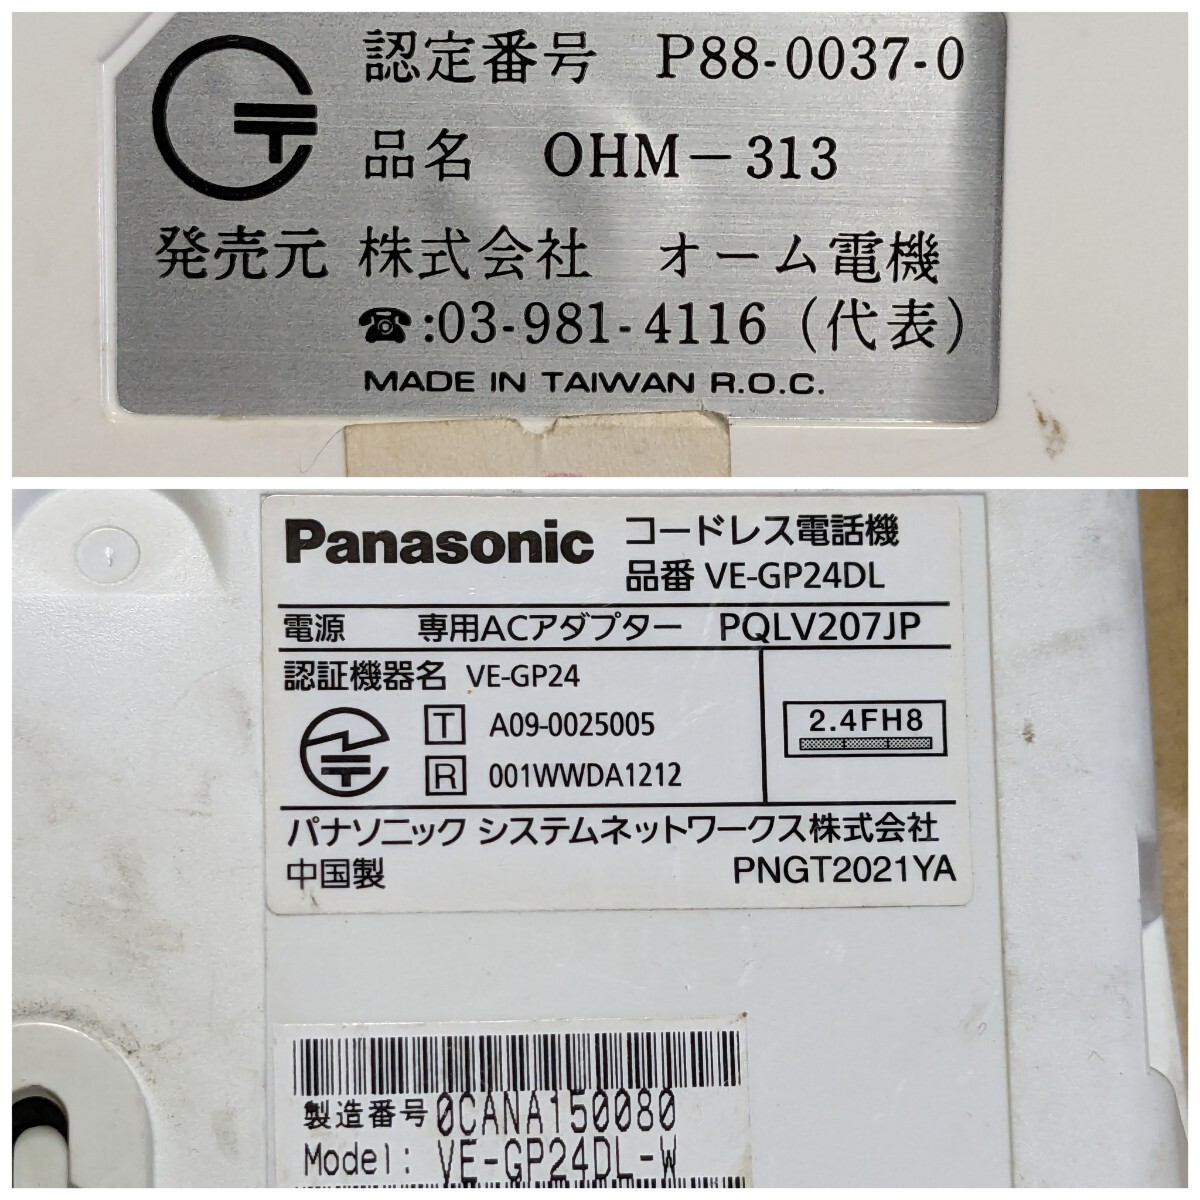 *Panasonic Panasonic telephone machine VE-GP24-W* ohm electro- machine OHM-313 search answer phone .... respondent . telephone call denial swindle measures 